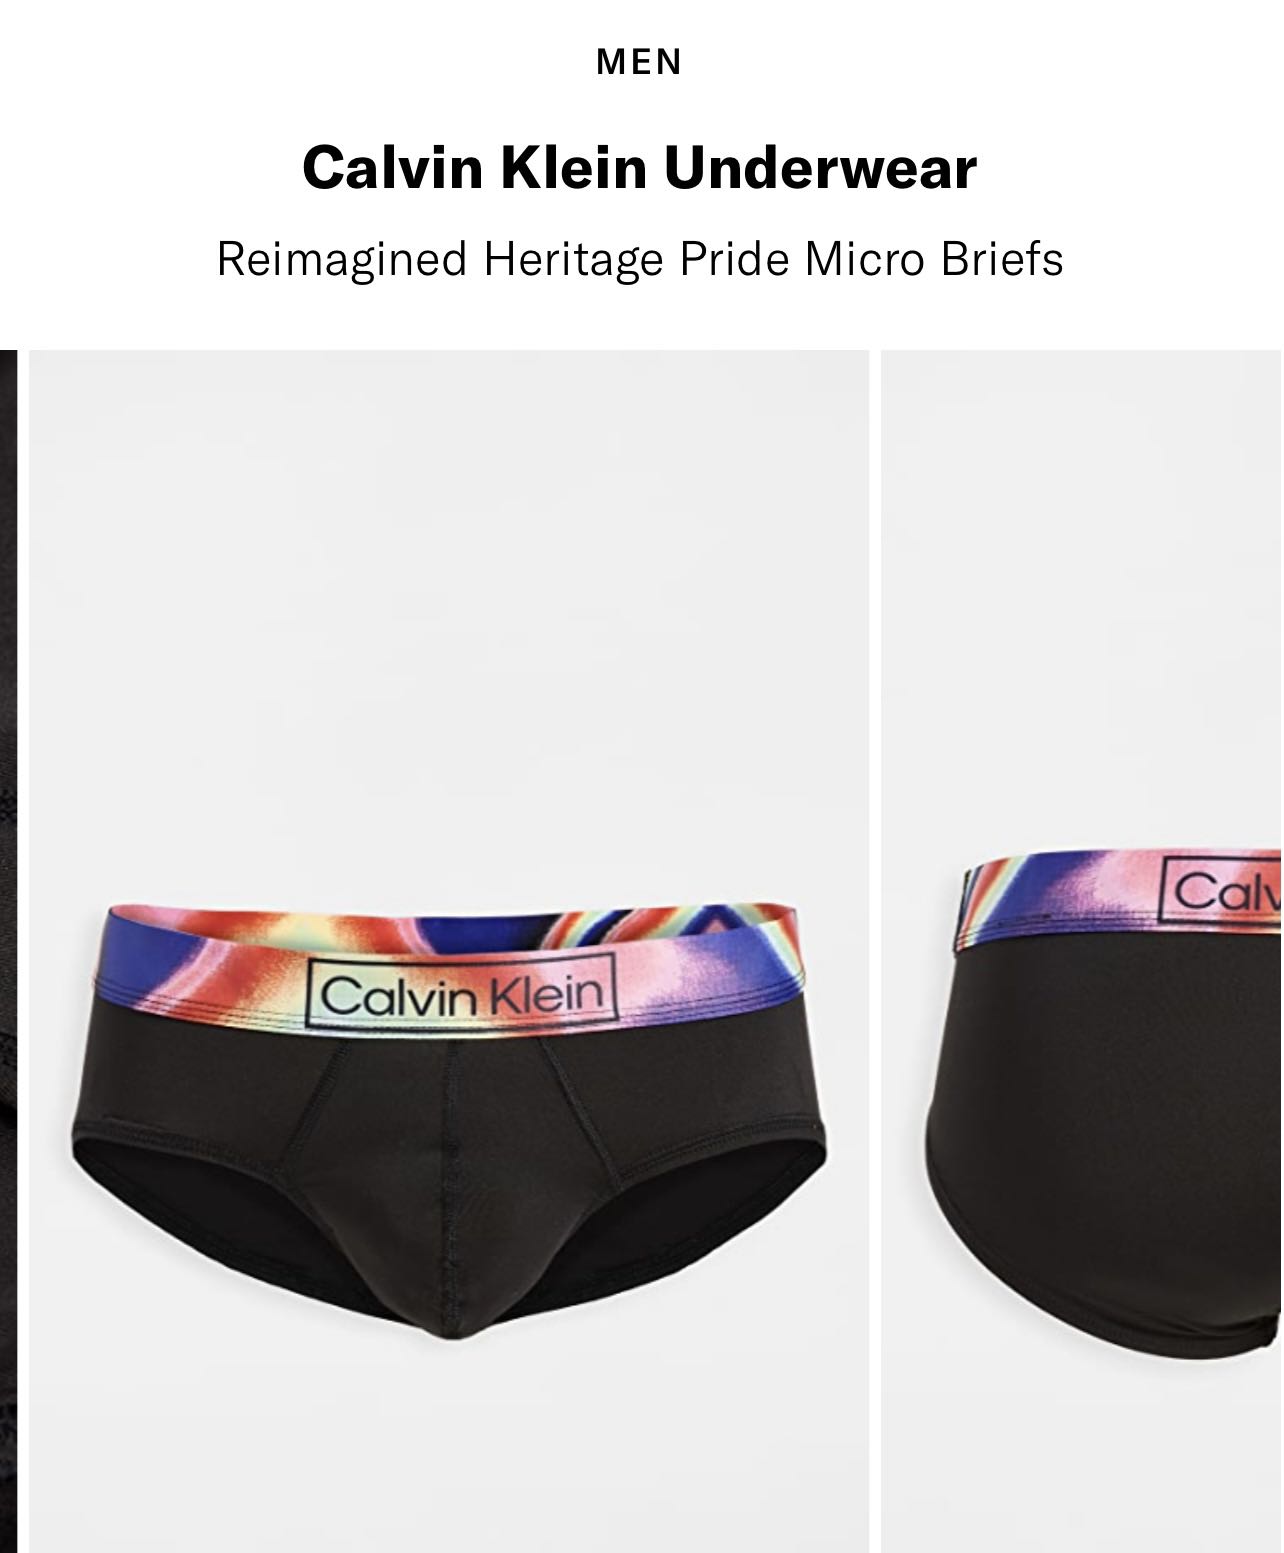 https://media.karousell.com/media/photos/products/2022/6/16/calvin_klein_underwear_pride_2_1655347448_2054fa0b.jpg